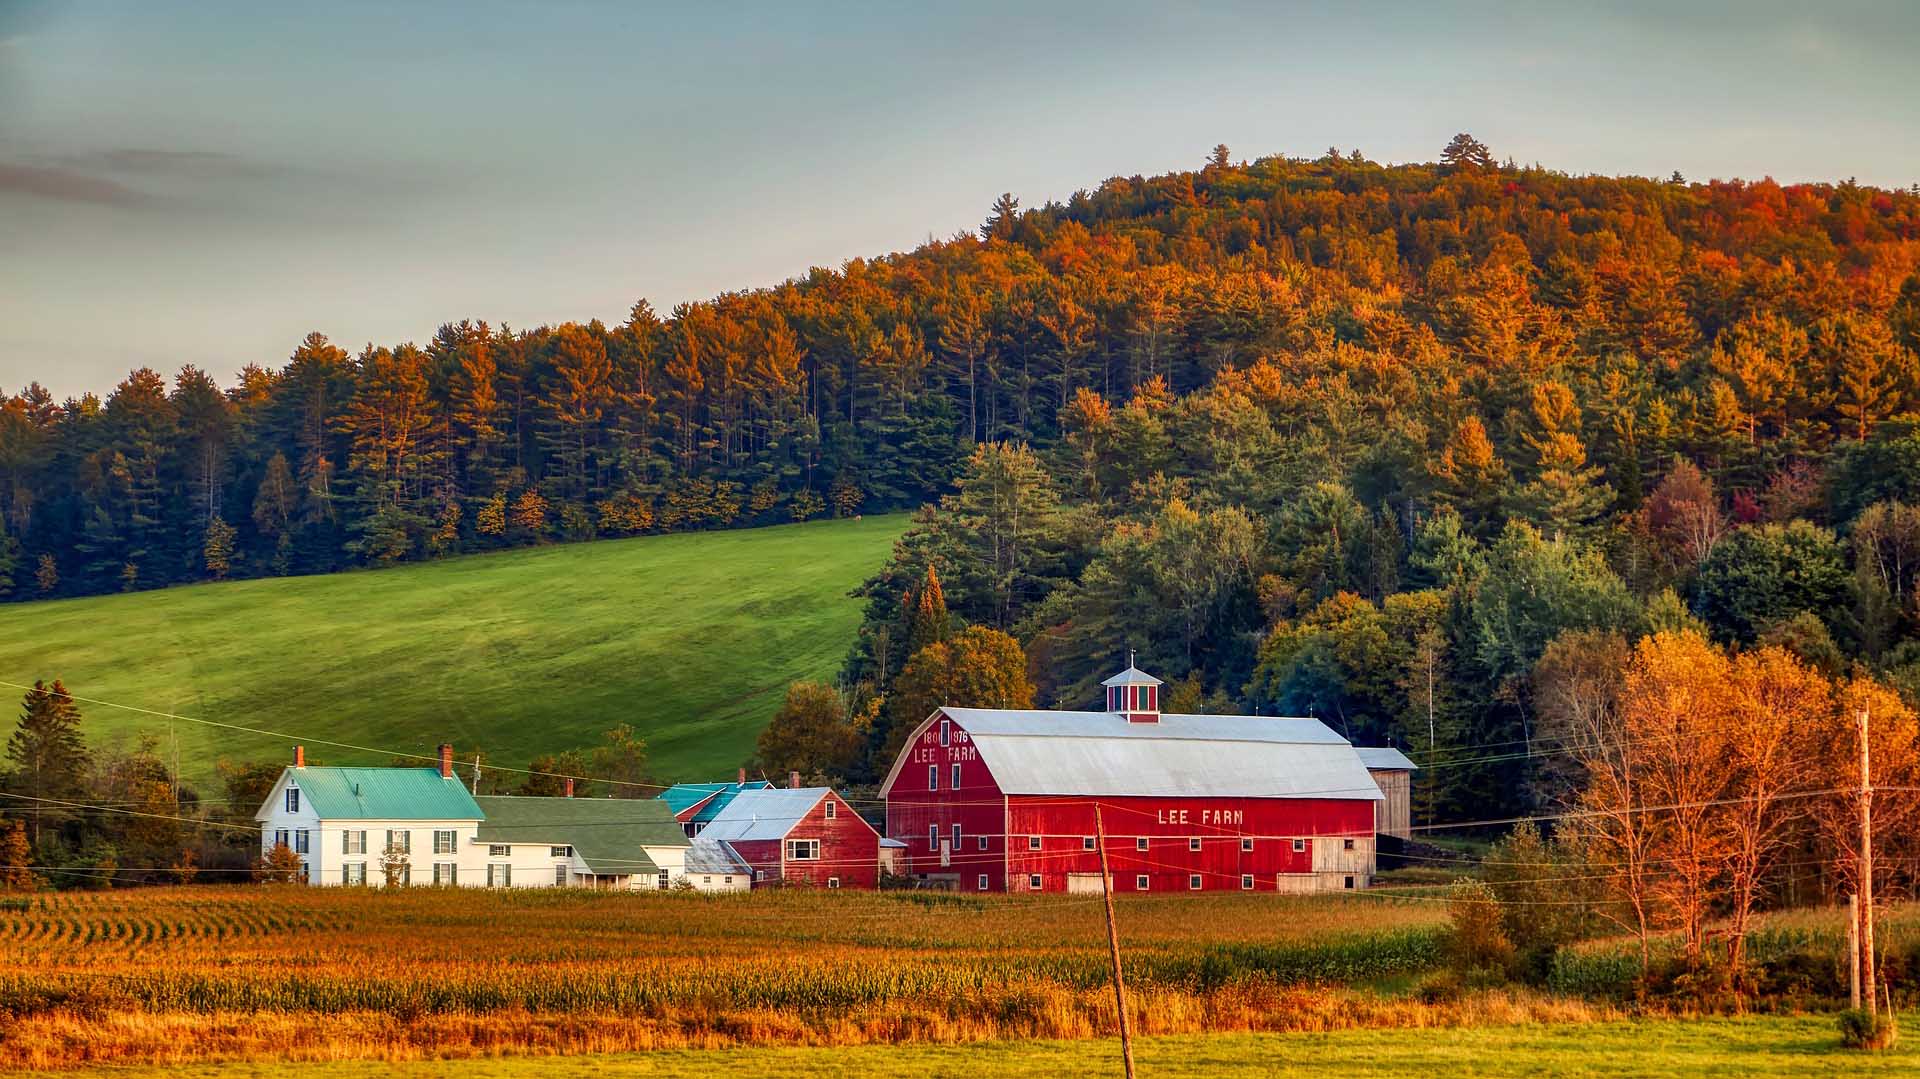 New Hampshire Farm